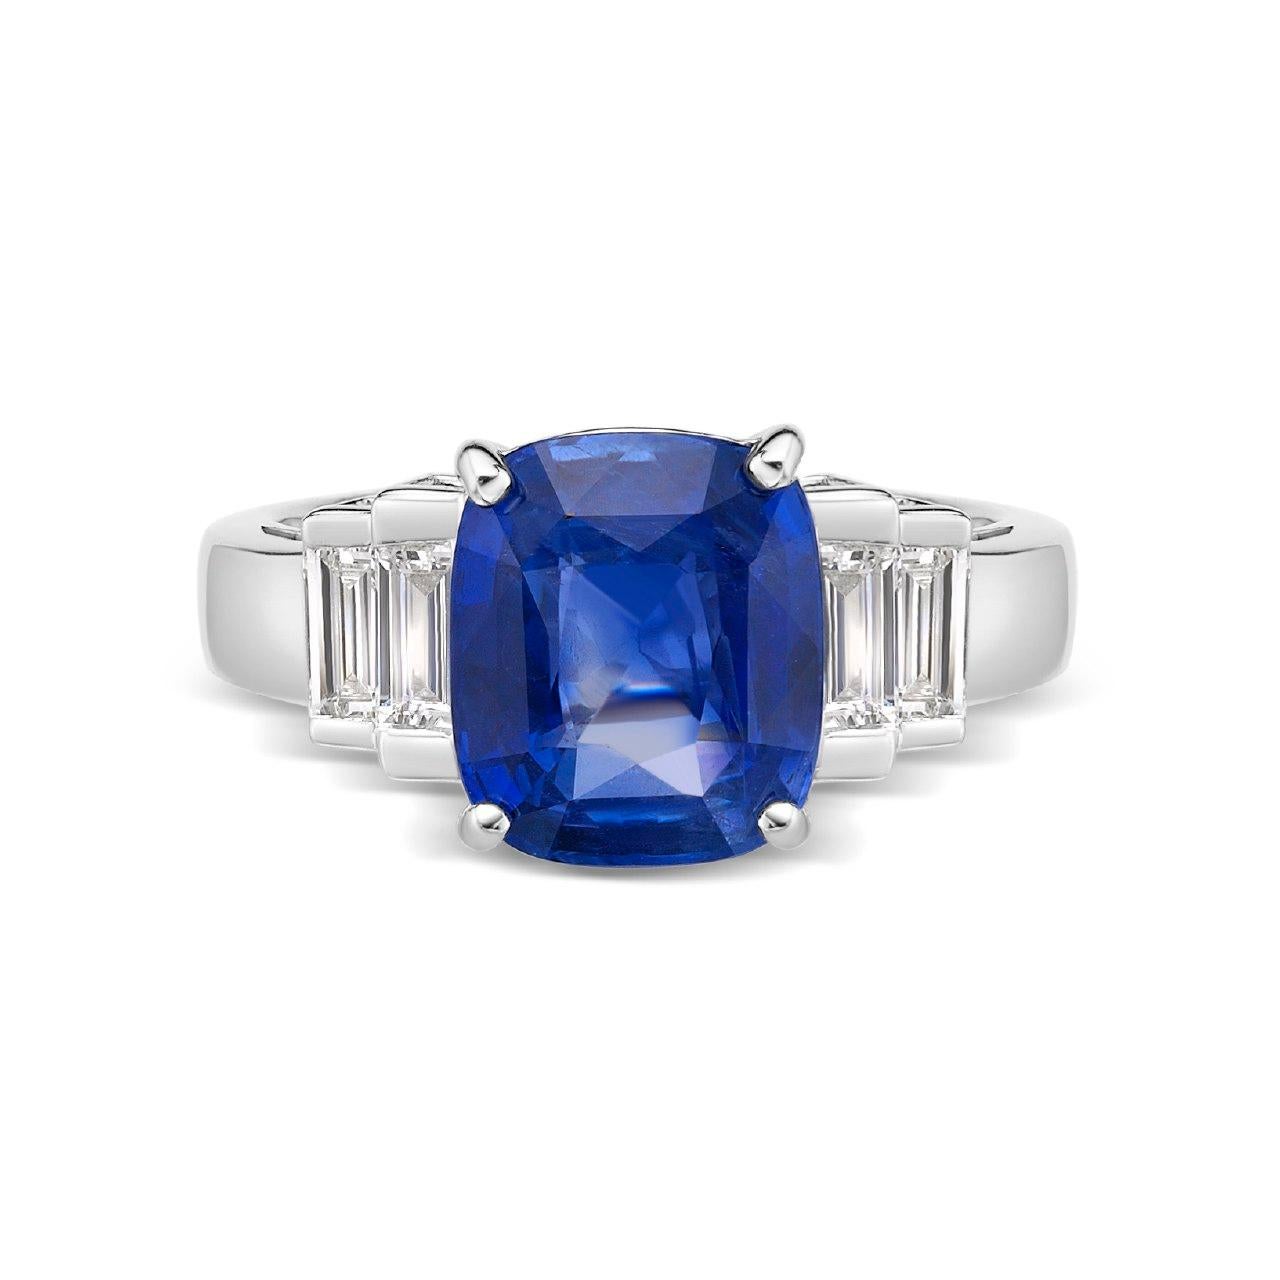 Primary Stone: Sapphire ( Sri Lanka )
Shape : Cushion Cut
Sapphire Weight: 4.35 Carats (1 Sapphire)
Measurements Sapphire: 9.85 mm x 8.40 mm x 5.25 mm
Color: Vivid Blue
Accent Stones: Genuine Diamond
Shape Or Cut Diamond: 4 Baguettes
Average